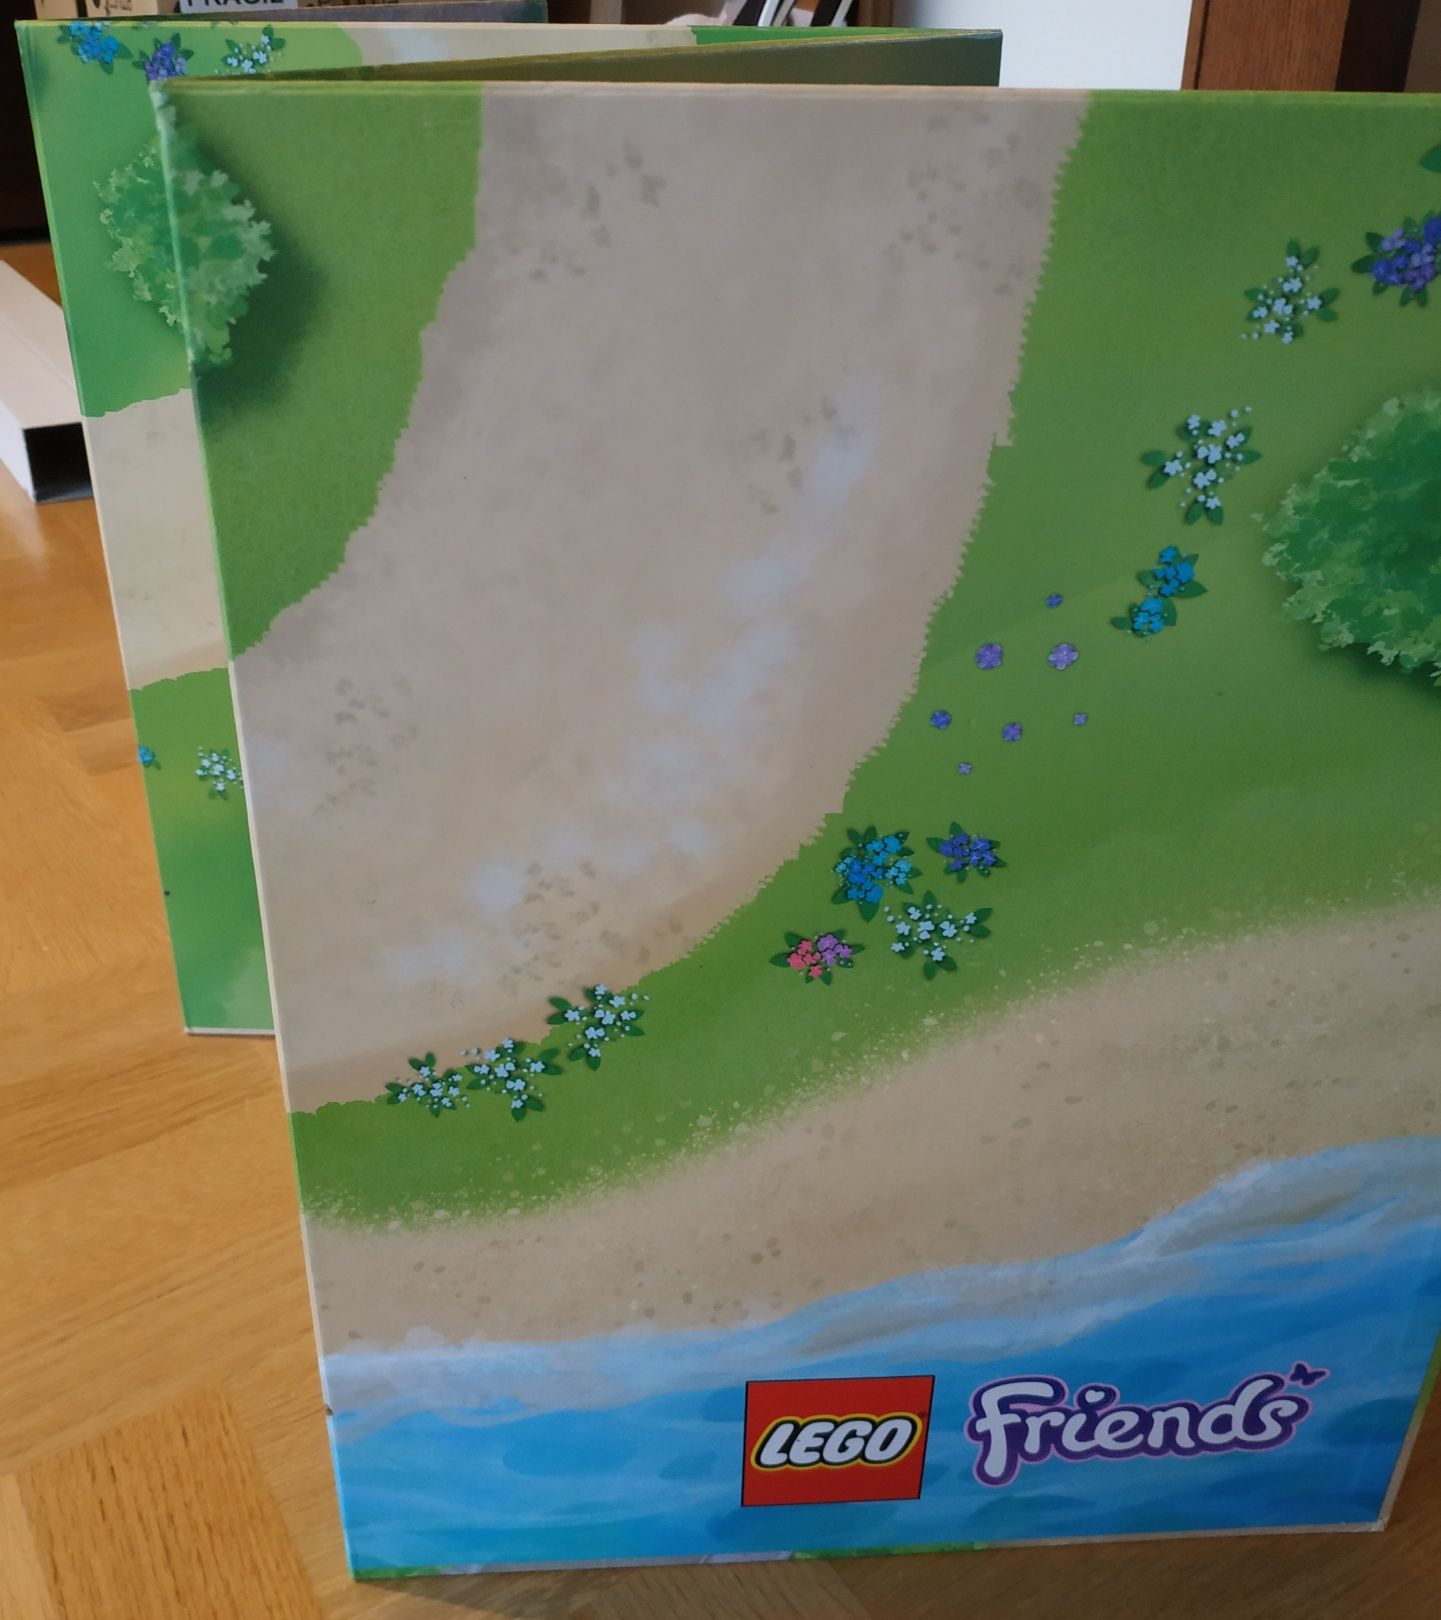 LEGO Friends - Playmata Heartlake duża, rozkładana, 115 x 74 cm+Gratis